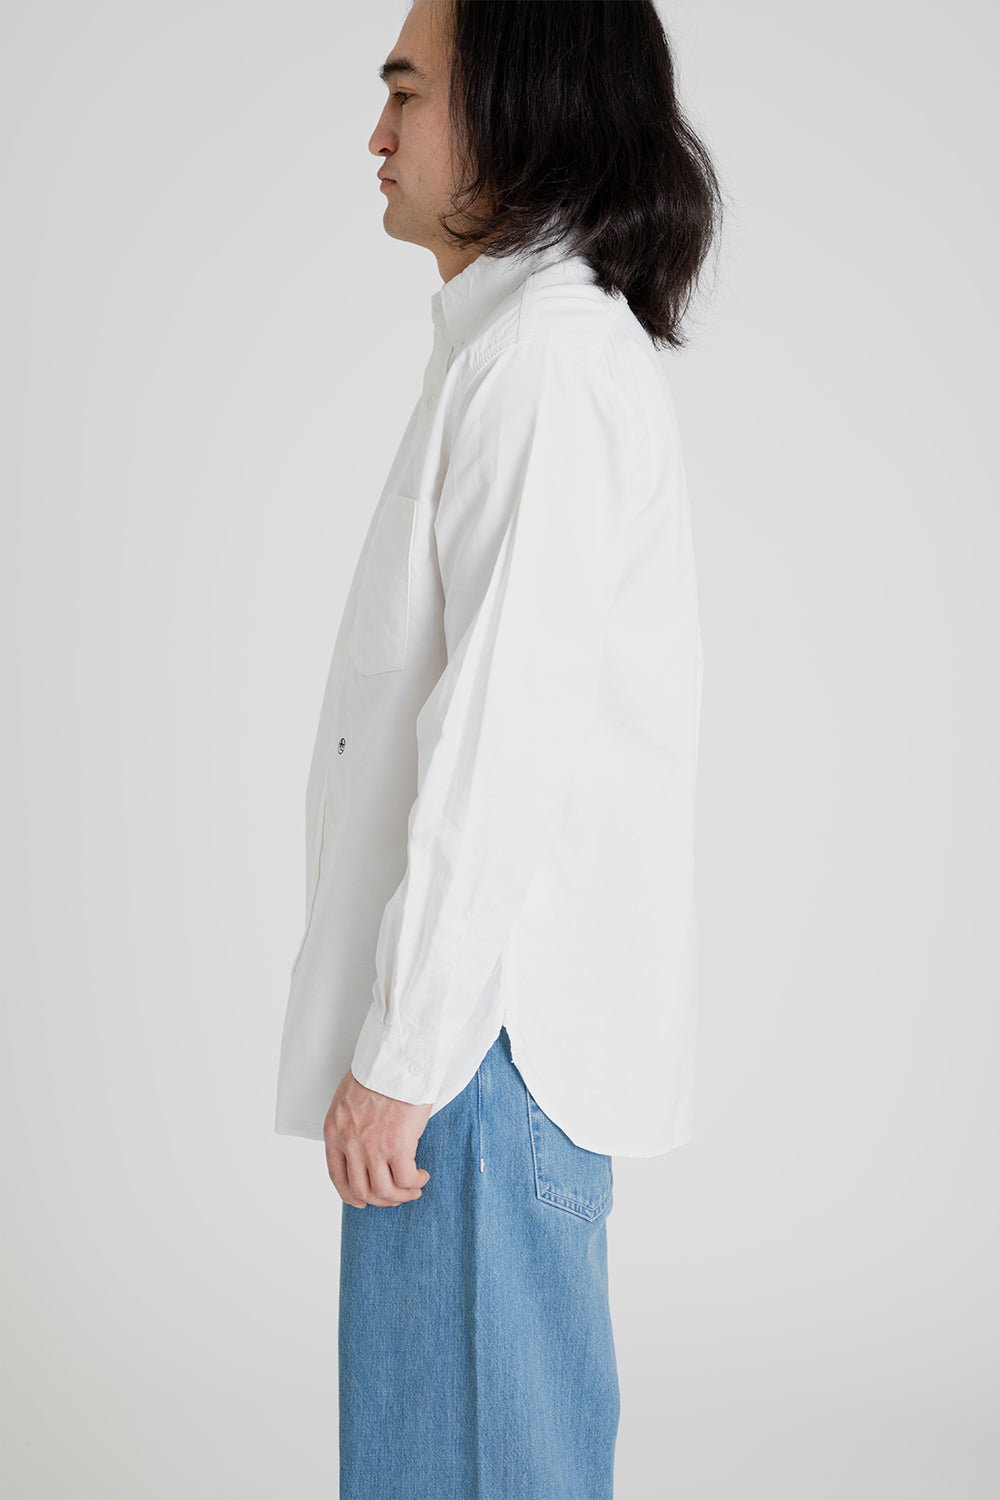 Nanamica Button Down Wind Shirt in White